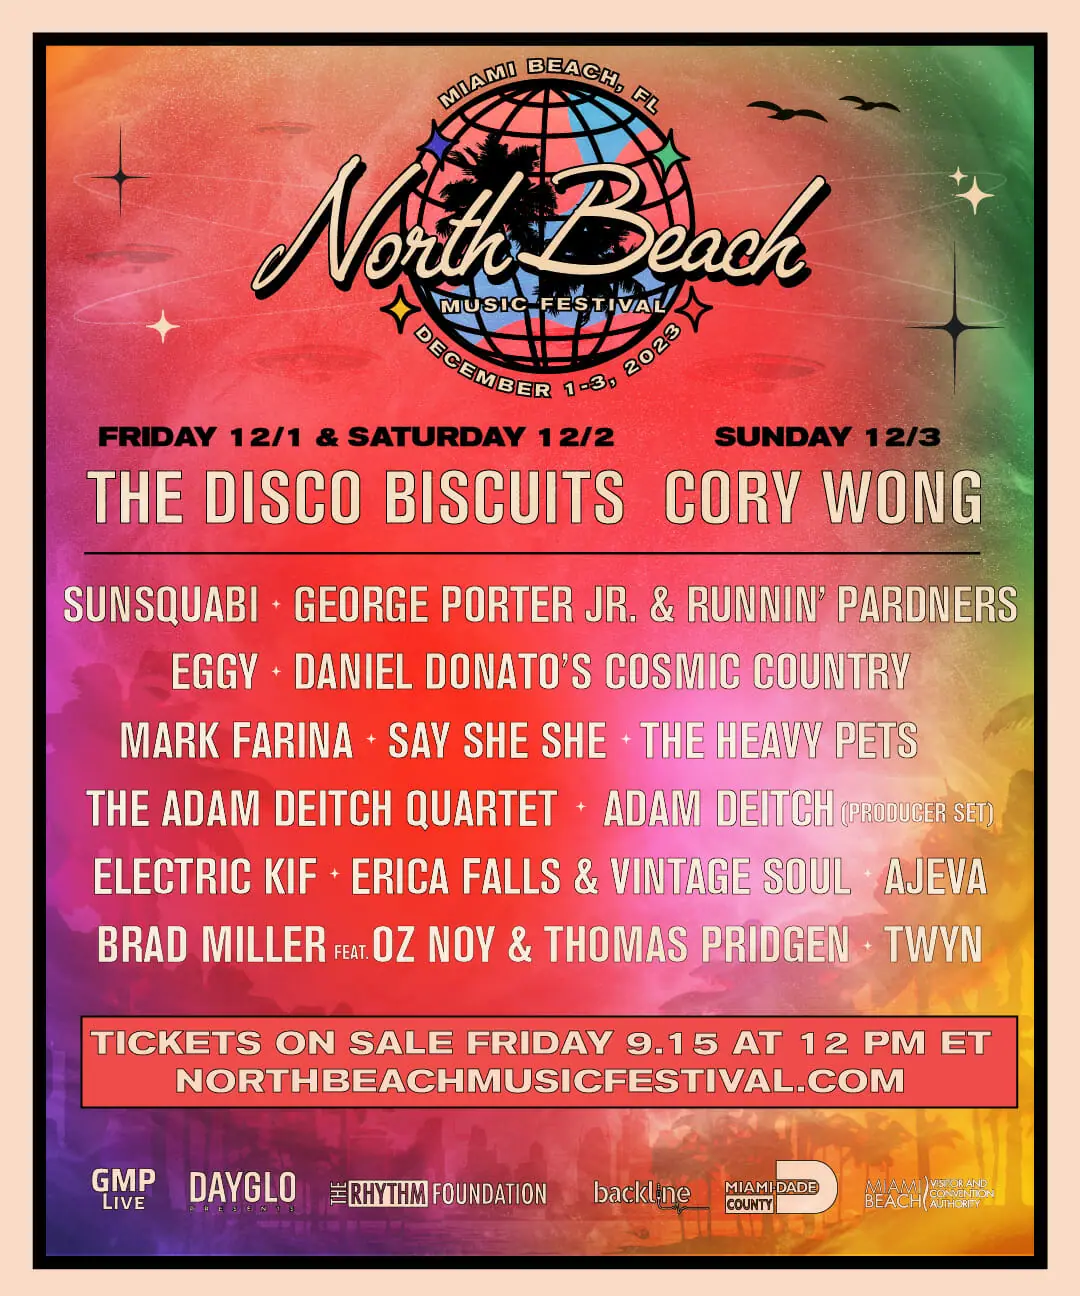 North Beach Music Festival  : Experience the Rhythm and Sound